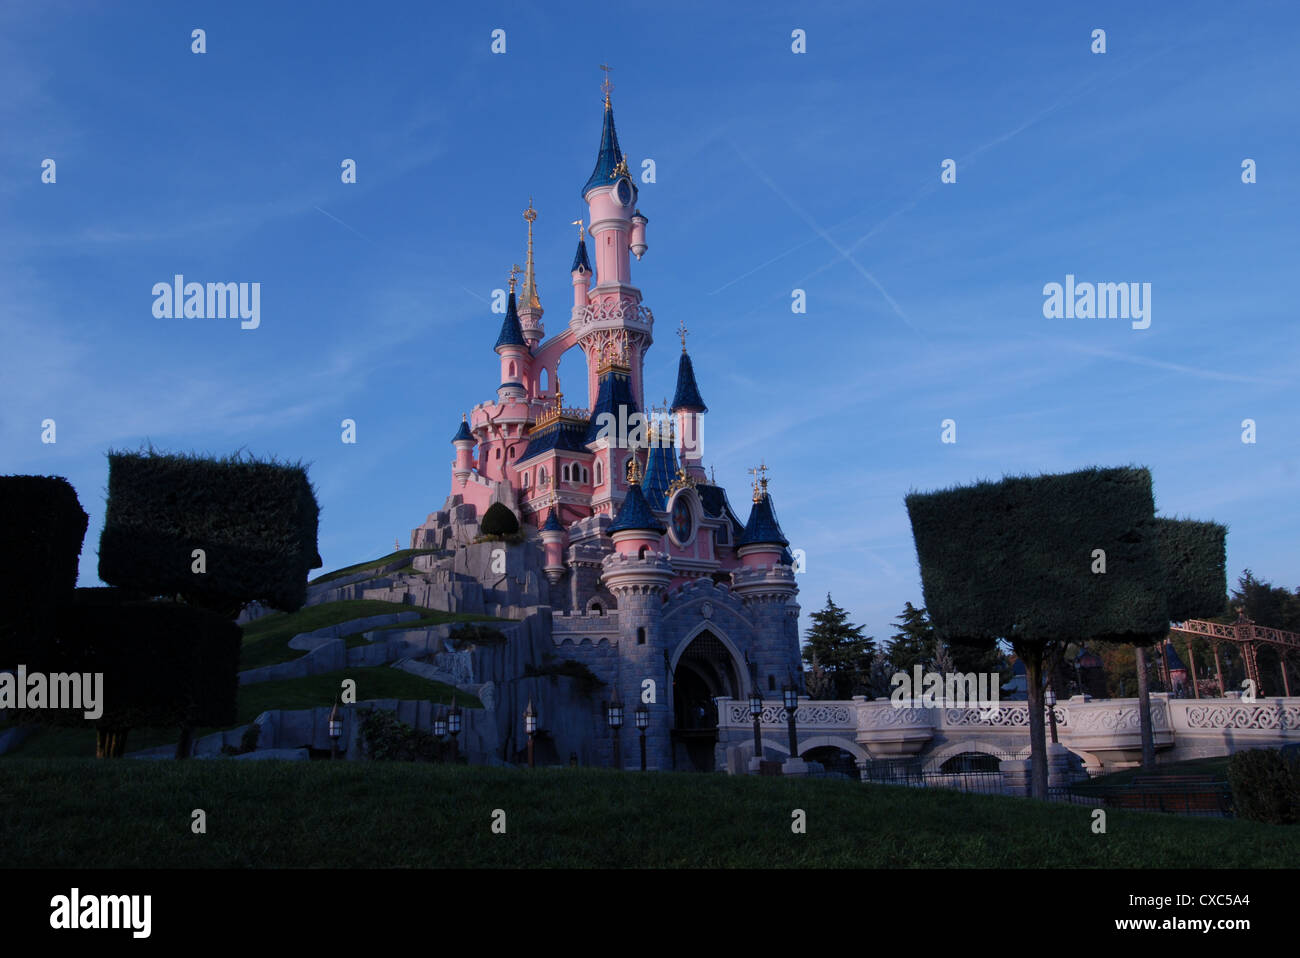 Sleeping Beauty's Castle Disneyland Resort Paris Stock Photo